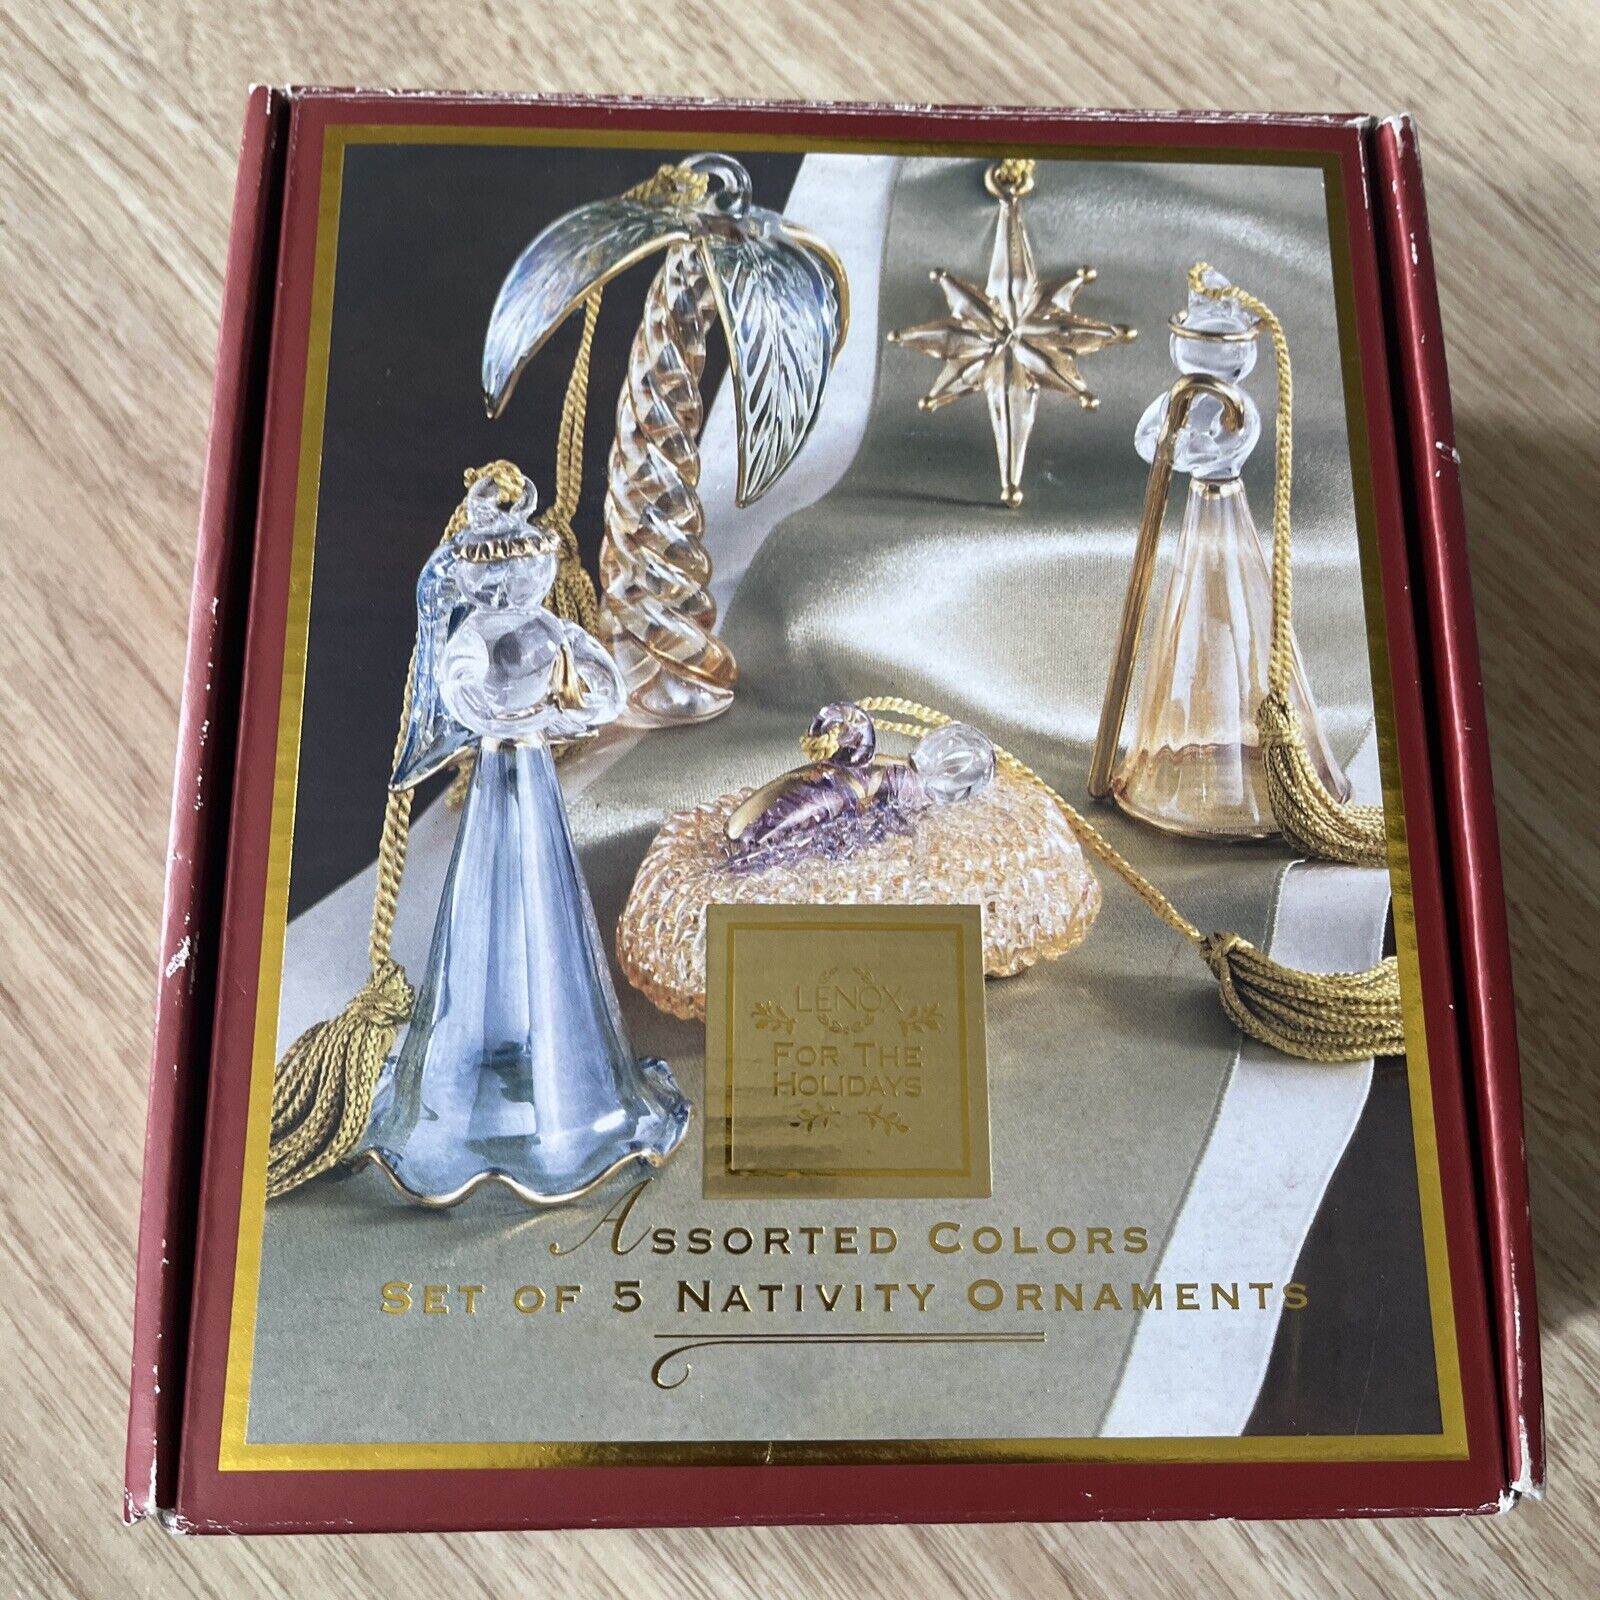 CIB Lenox For the Holidays Glass Nativity Ornaments Crystals Set of 5